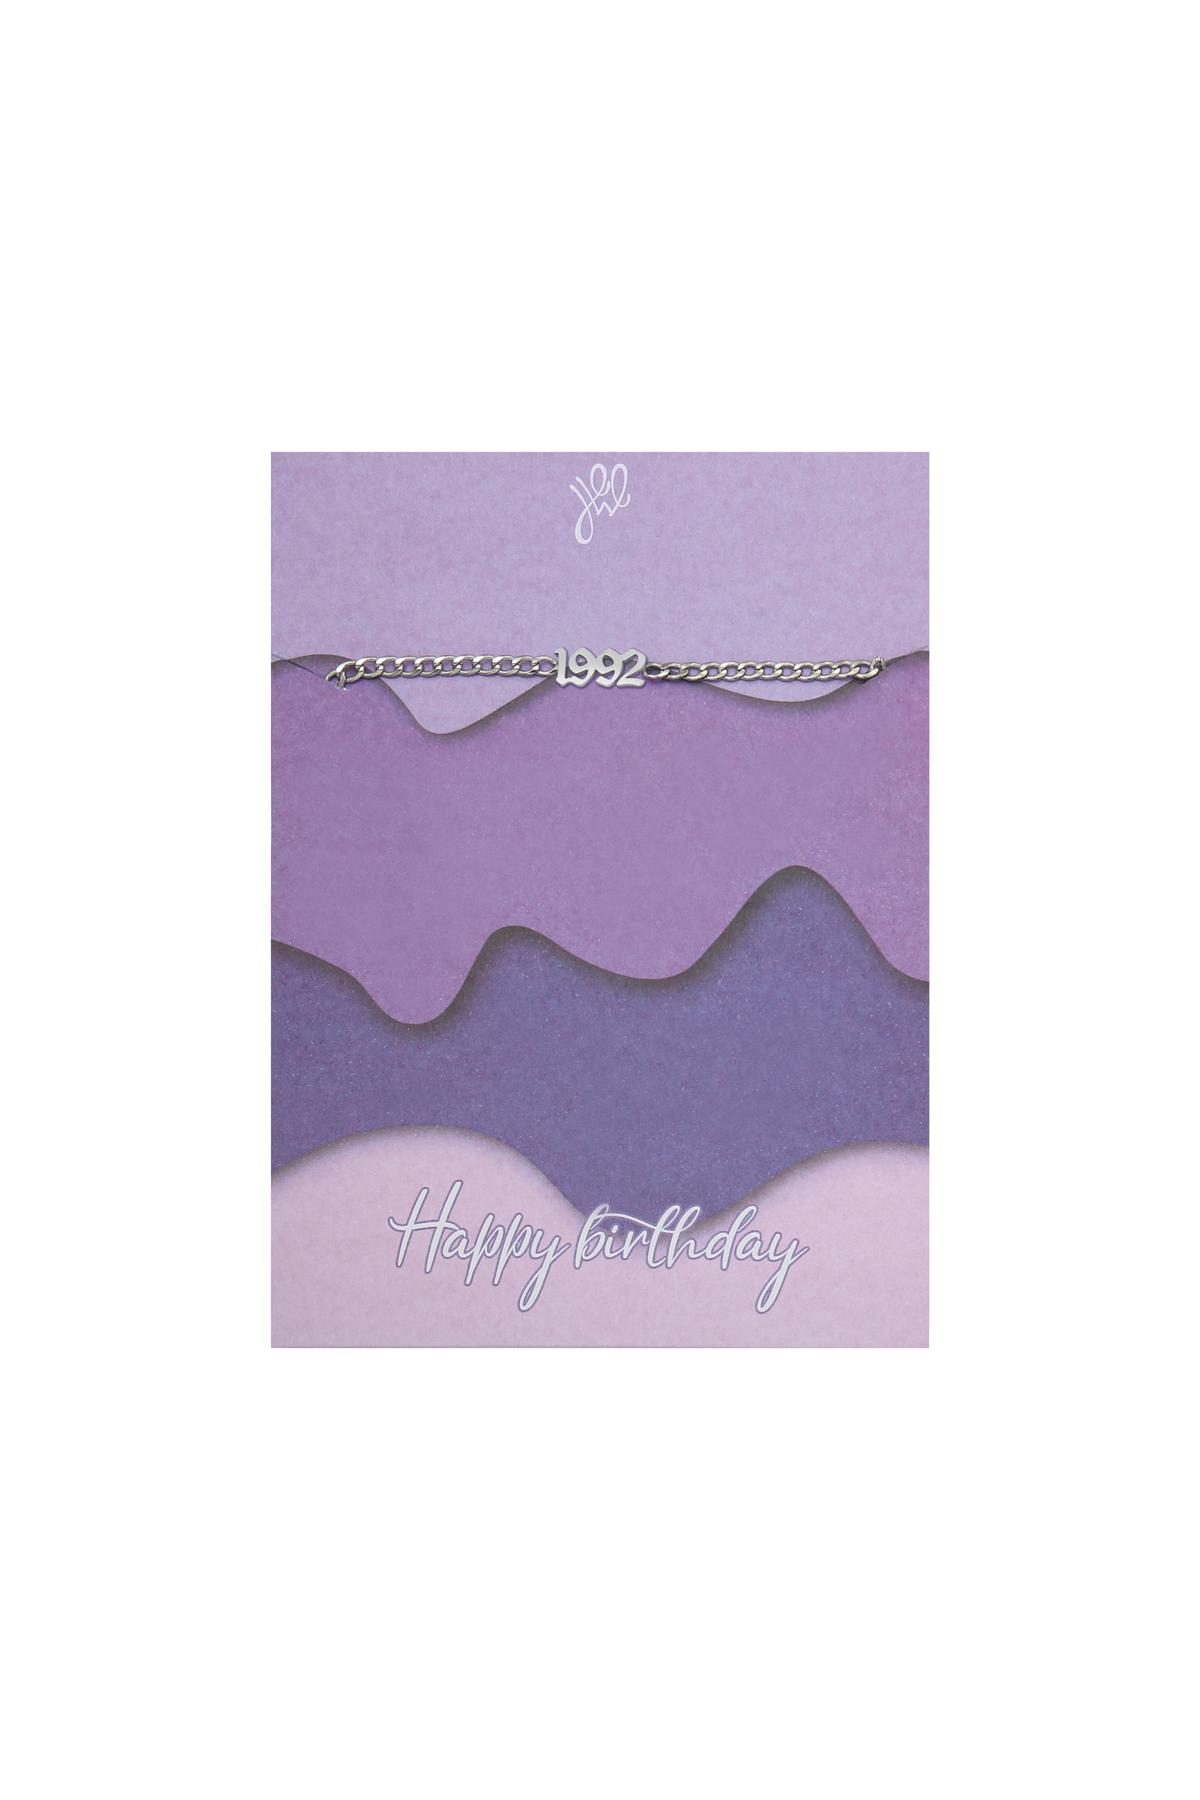 Silber / Armband Happy Birthday Years - 1992 Silber Edelstahl Bild2